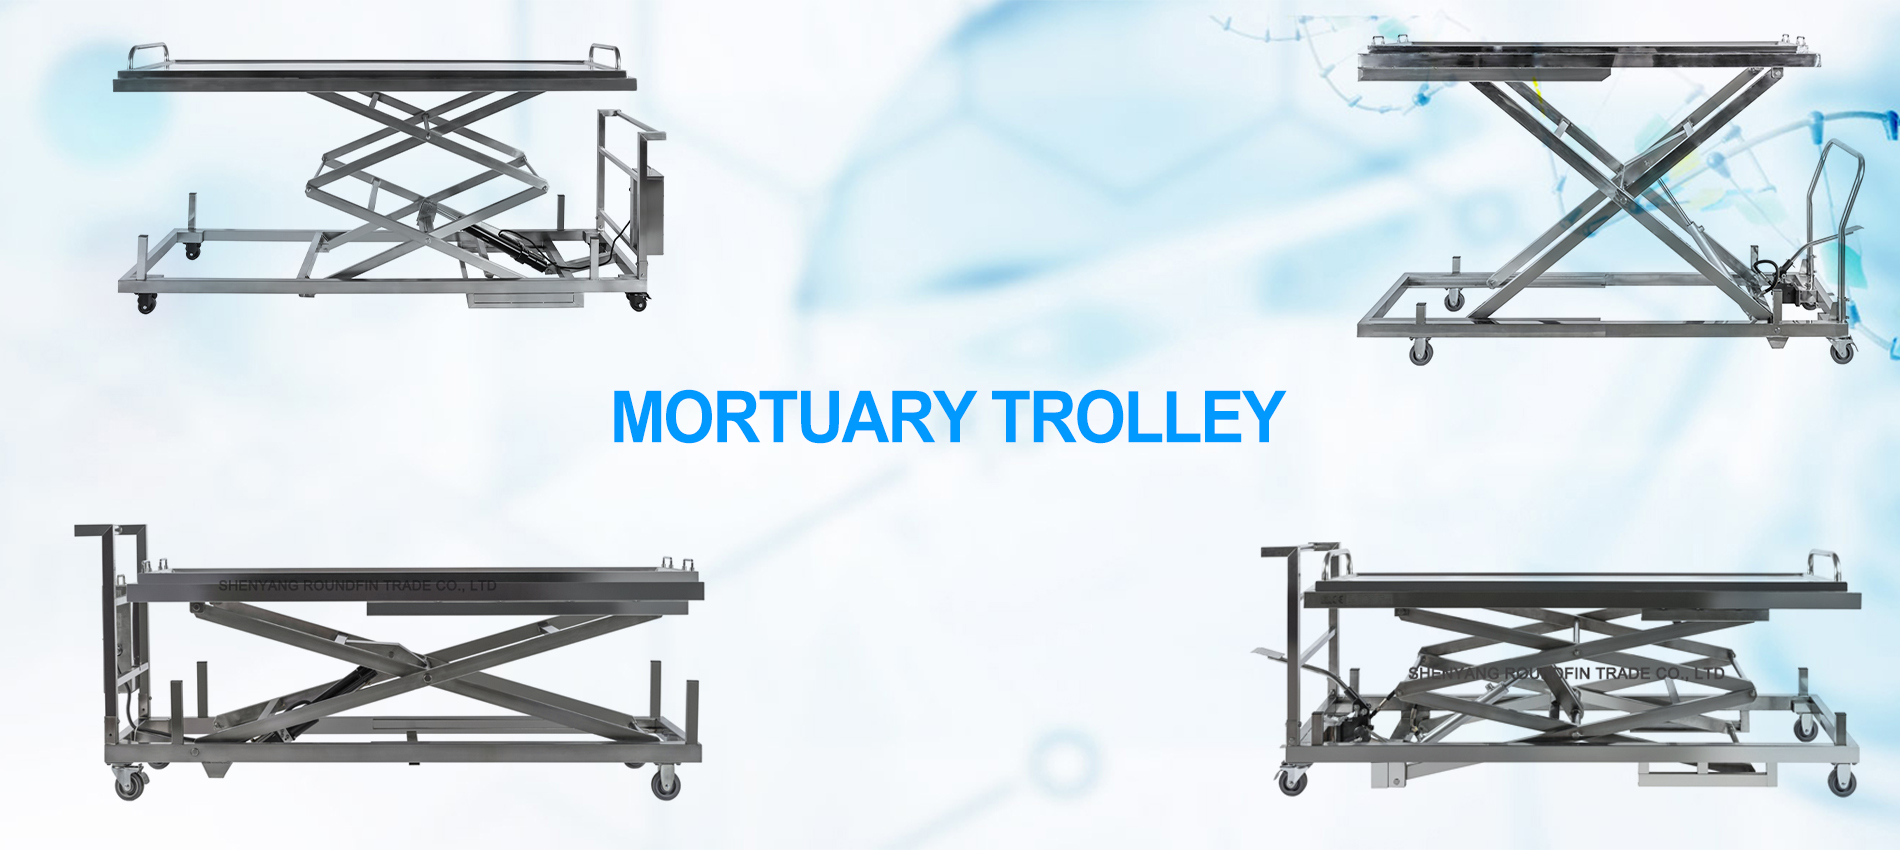 Mortuary trolley